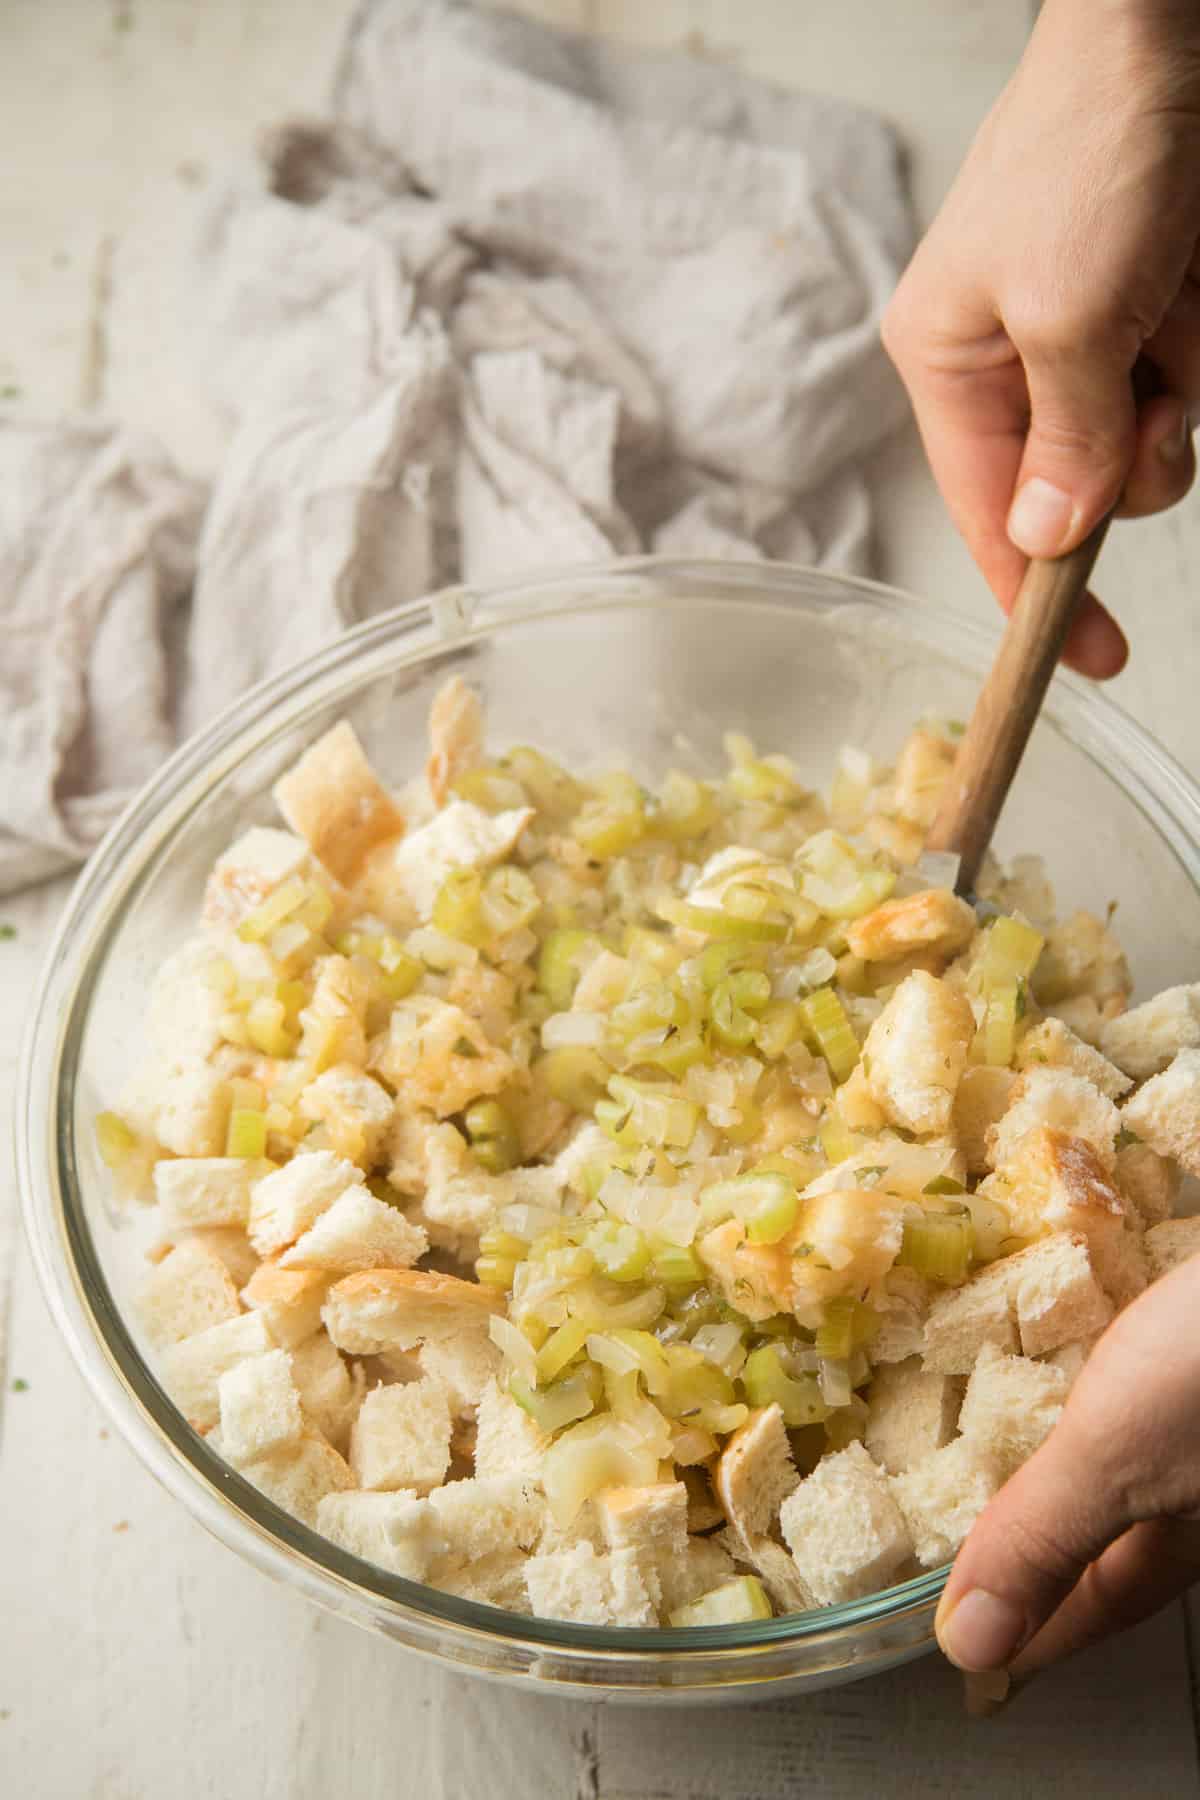 Hand Stirring Vegan Stuffing ingredients together in a bowl.